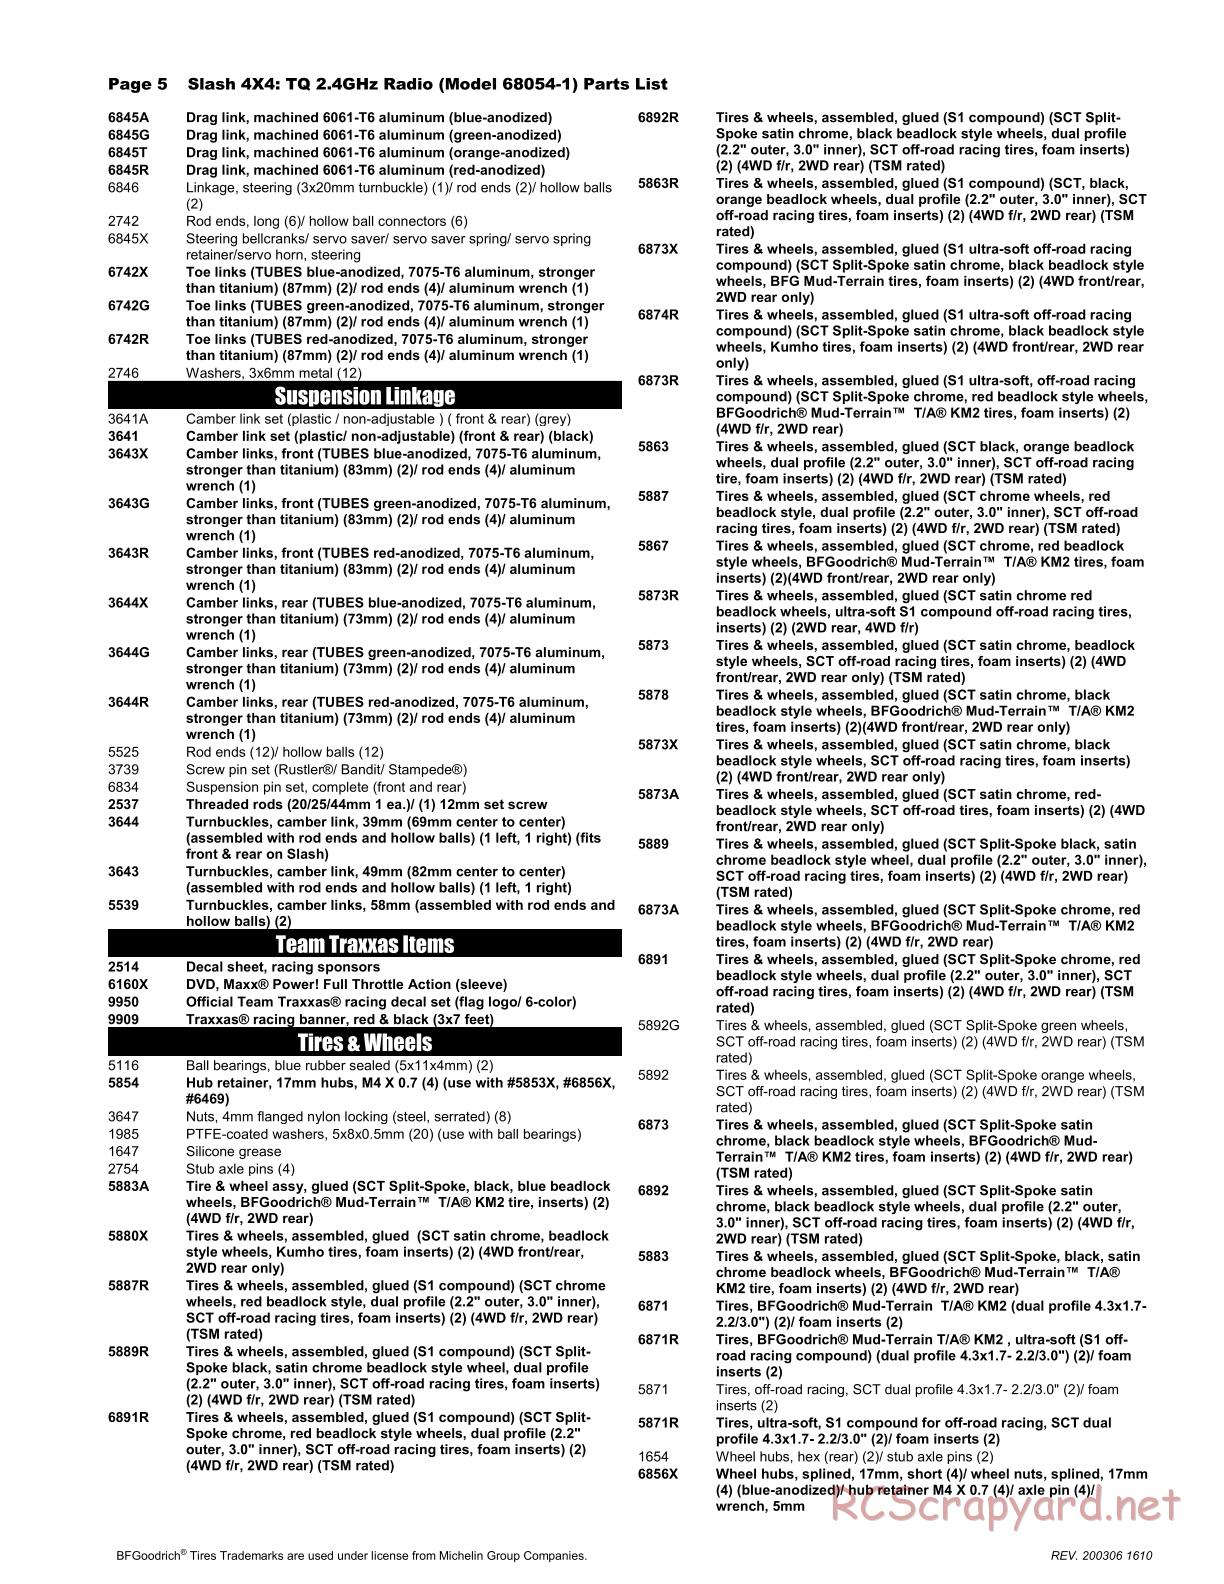 Traxxas - Slash 4x4 Brushed - Parts List - Page 5